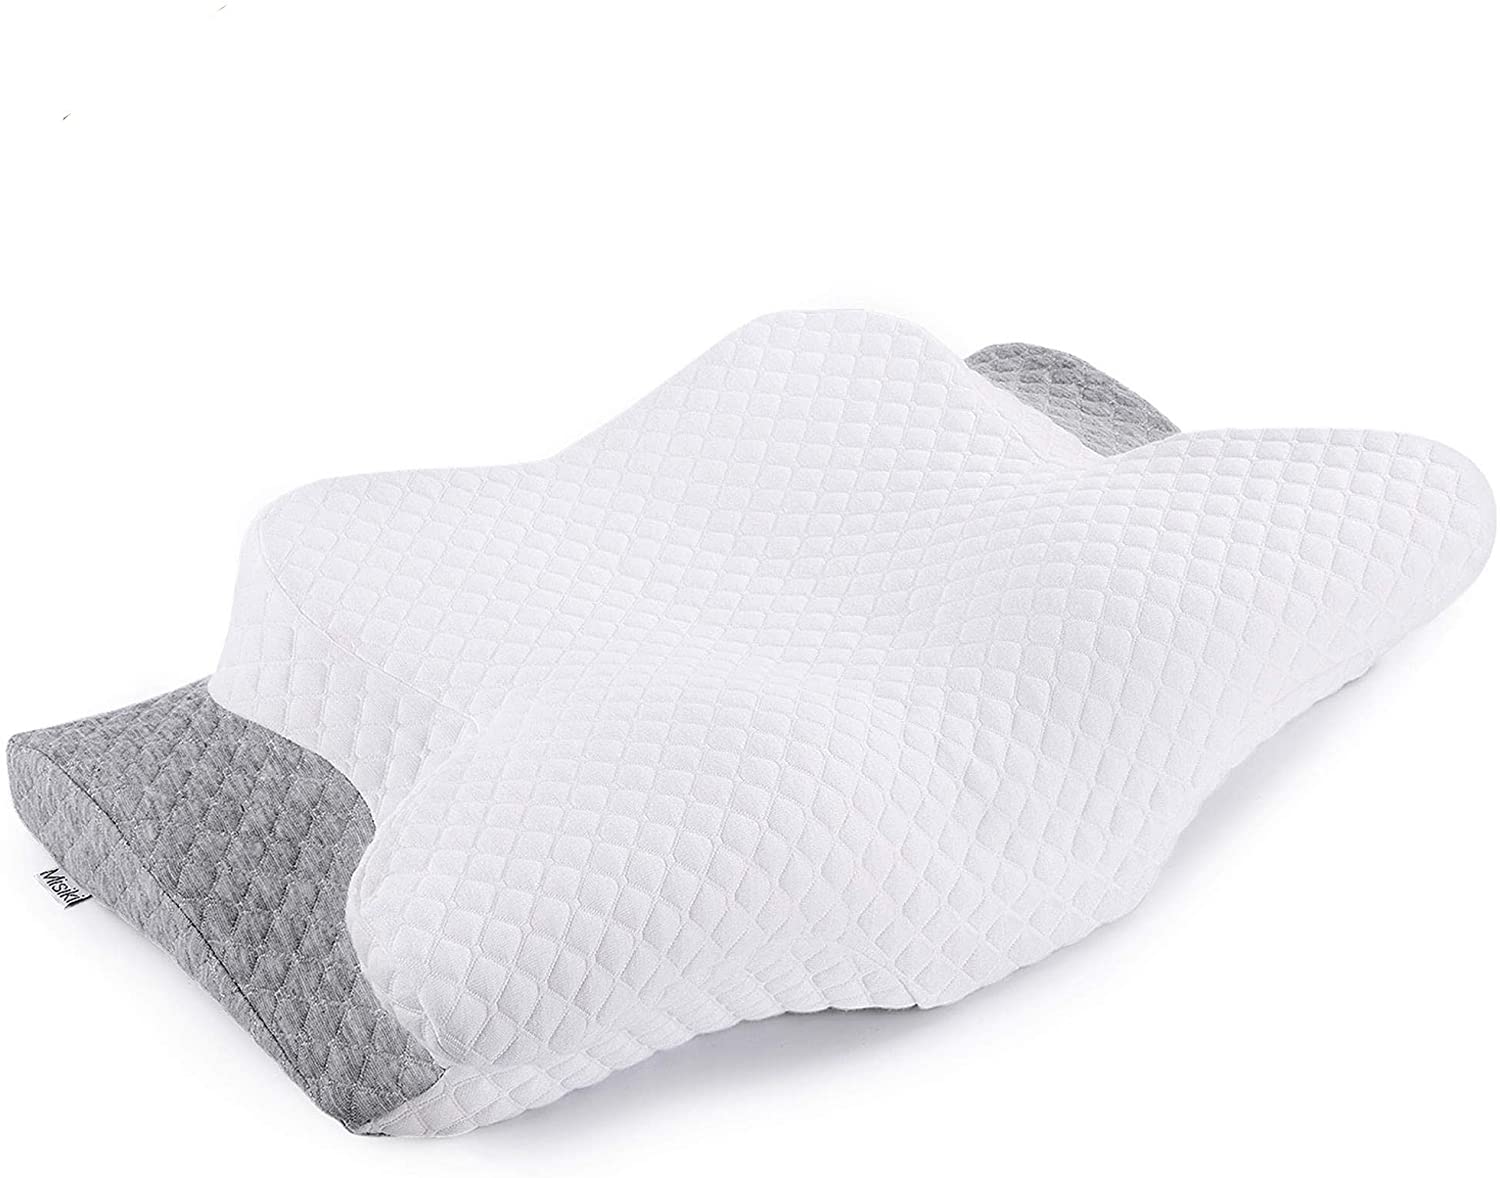 Misiki orthopaedic pillow